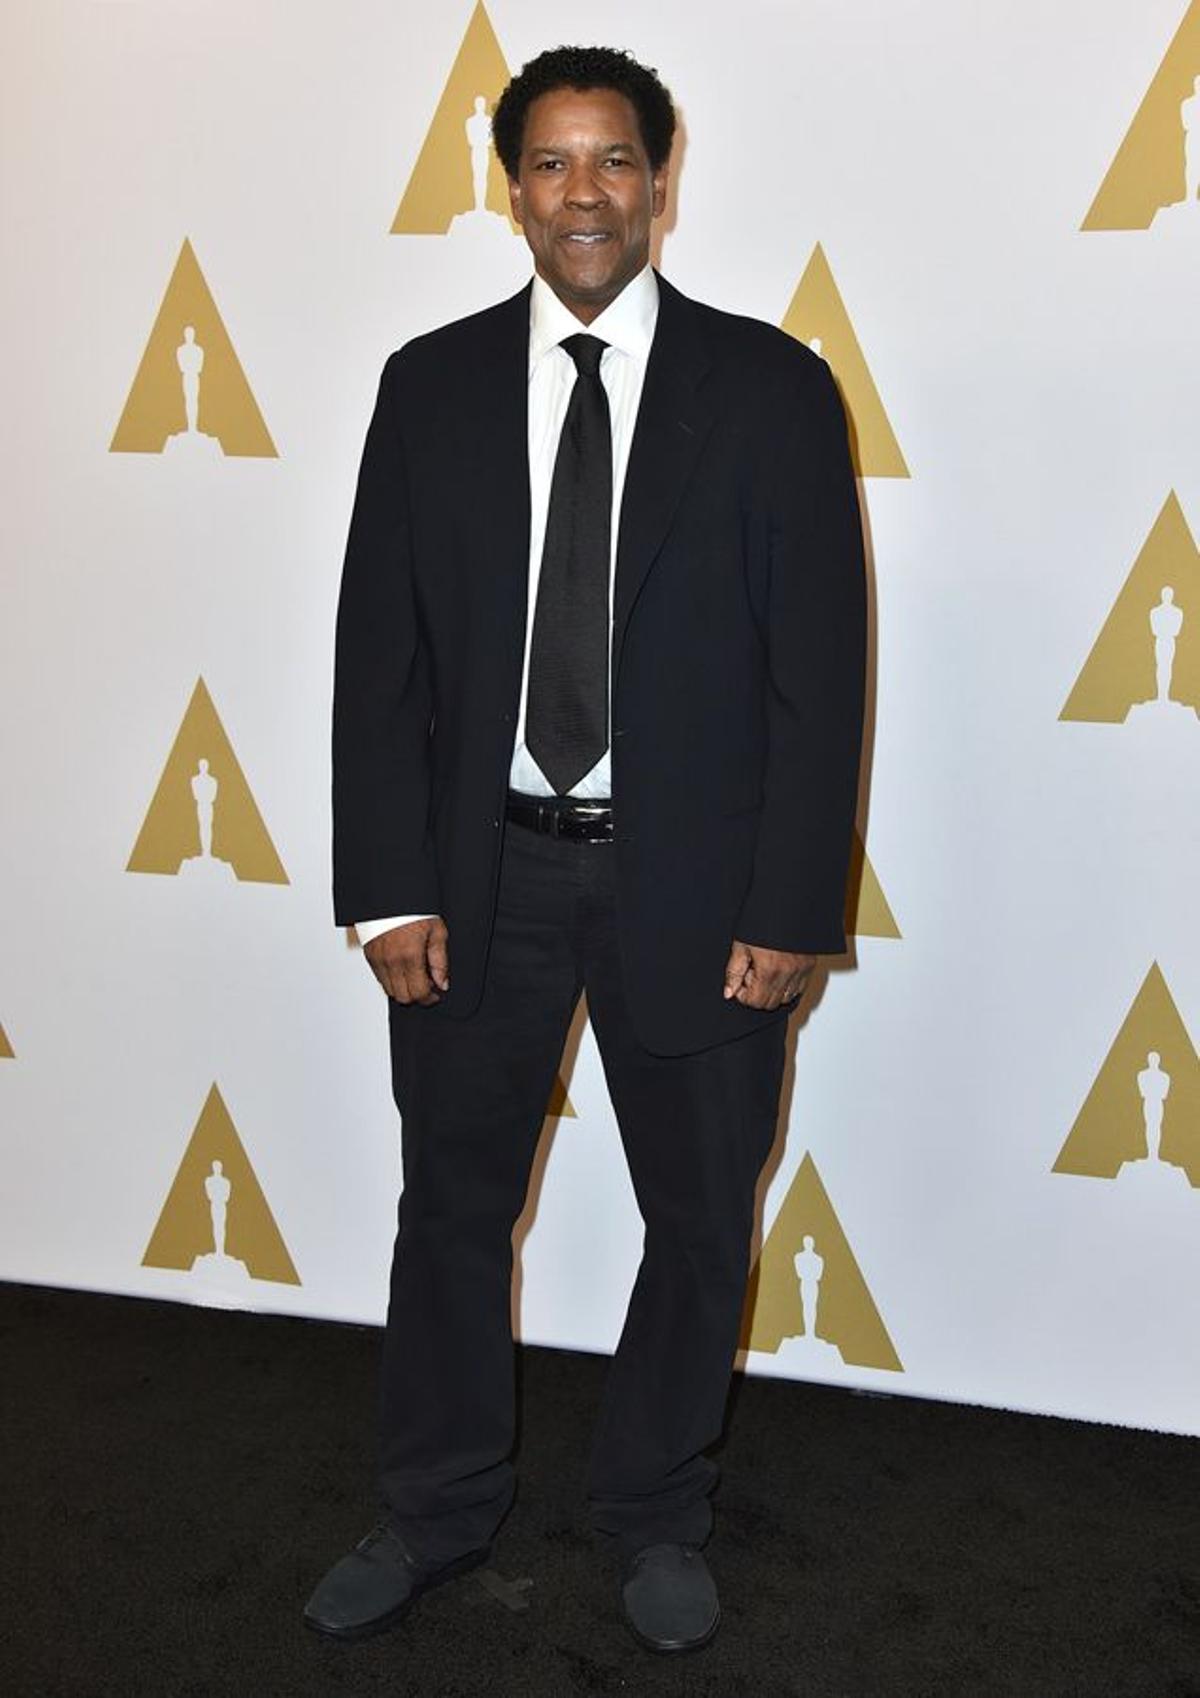 Almuerzo previo a los Oscar: Denzel Washington